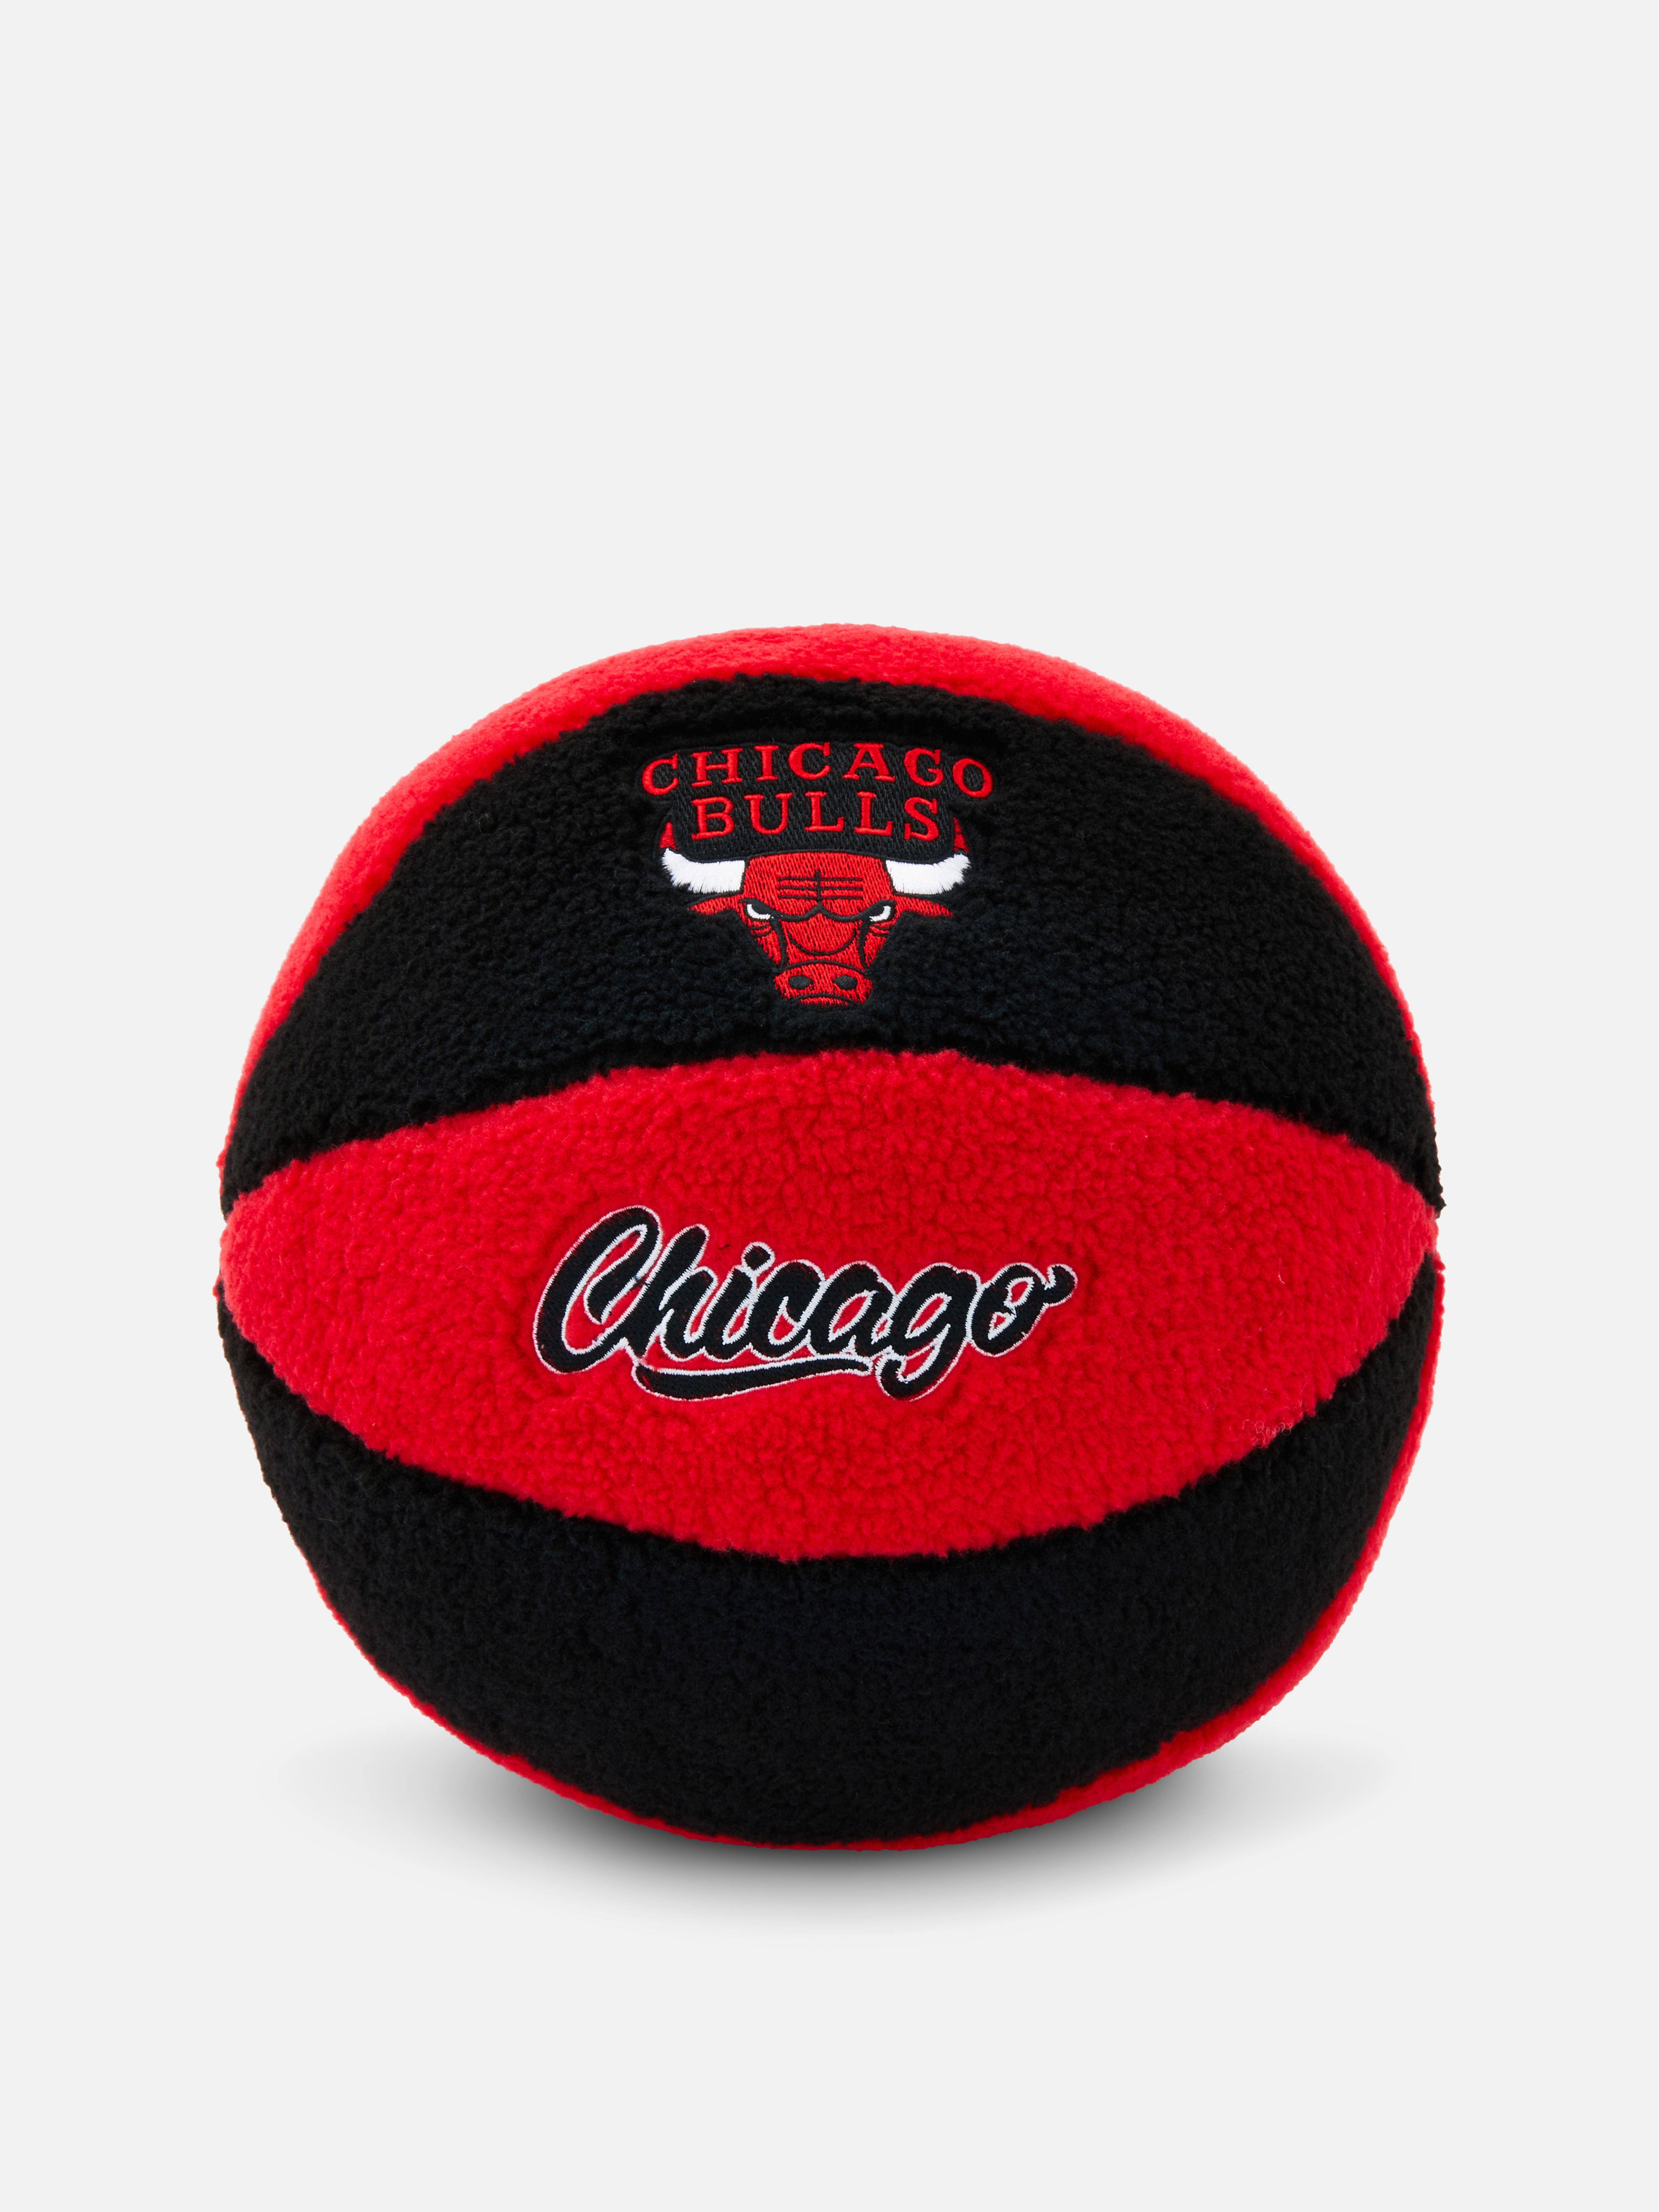 NBA Chicago Bulls Basketball Cushion